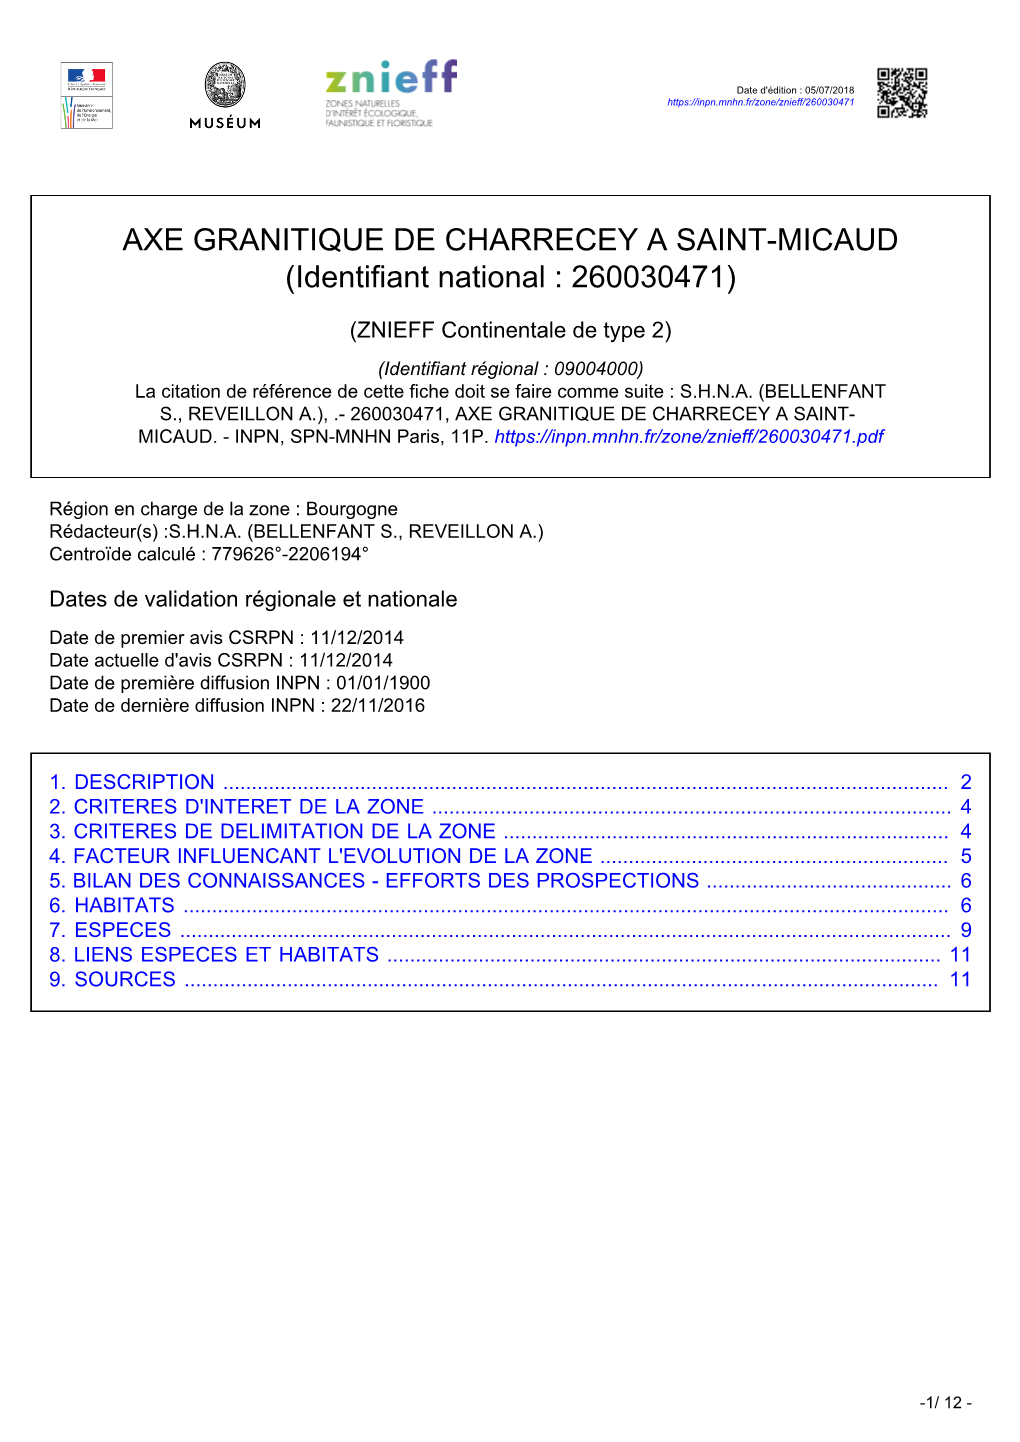 AXE GRANITIQUE DE CHARRECEY a SAINT-MICAUD (Identifiant National : 260030471)